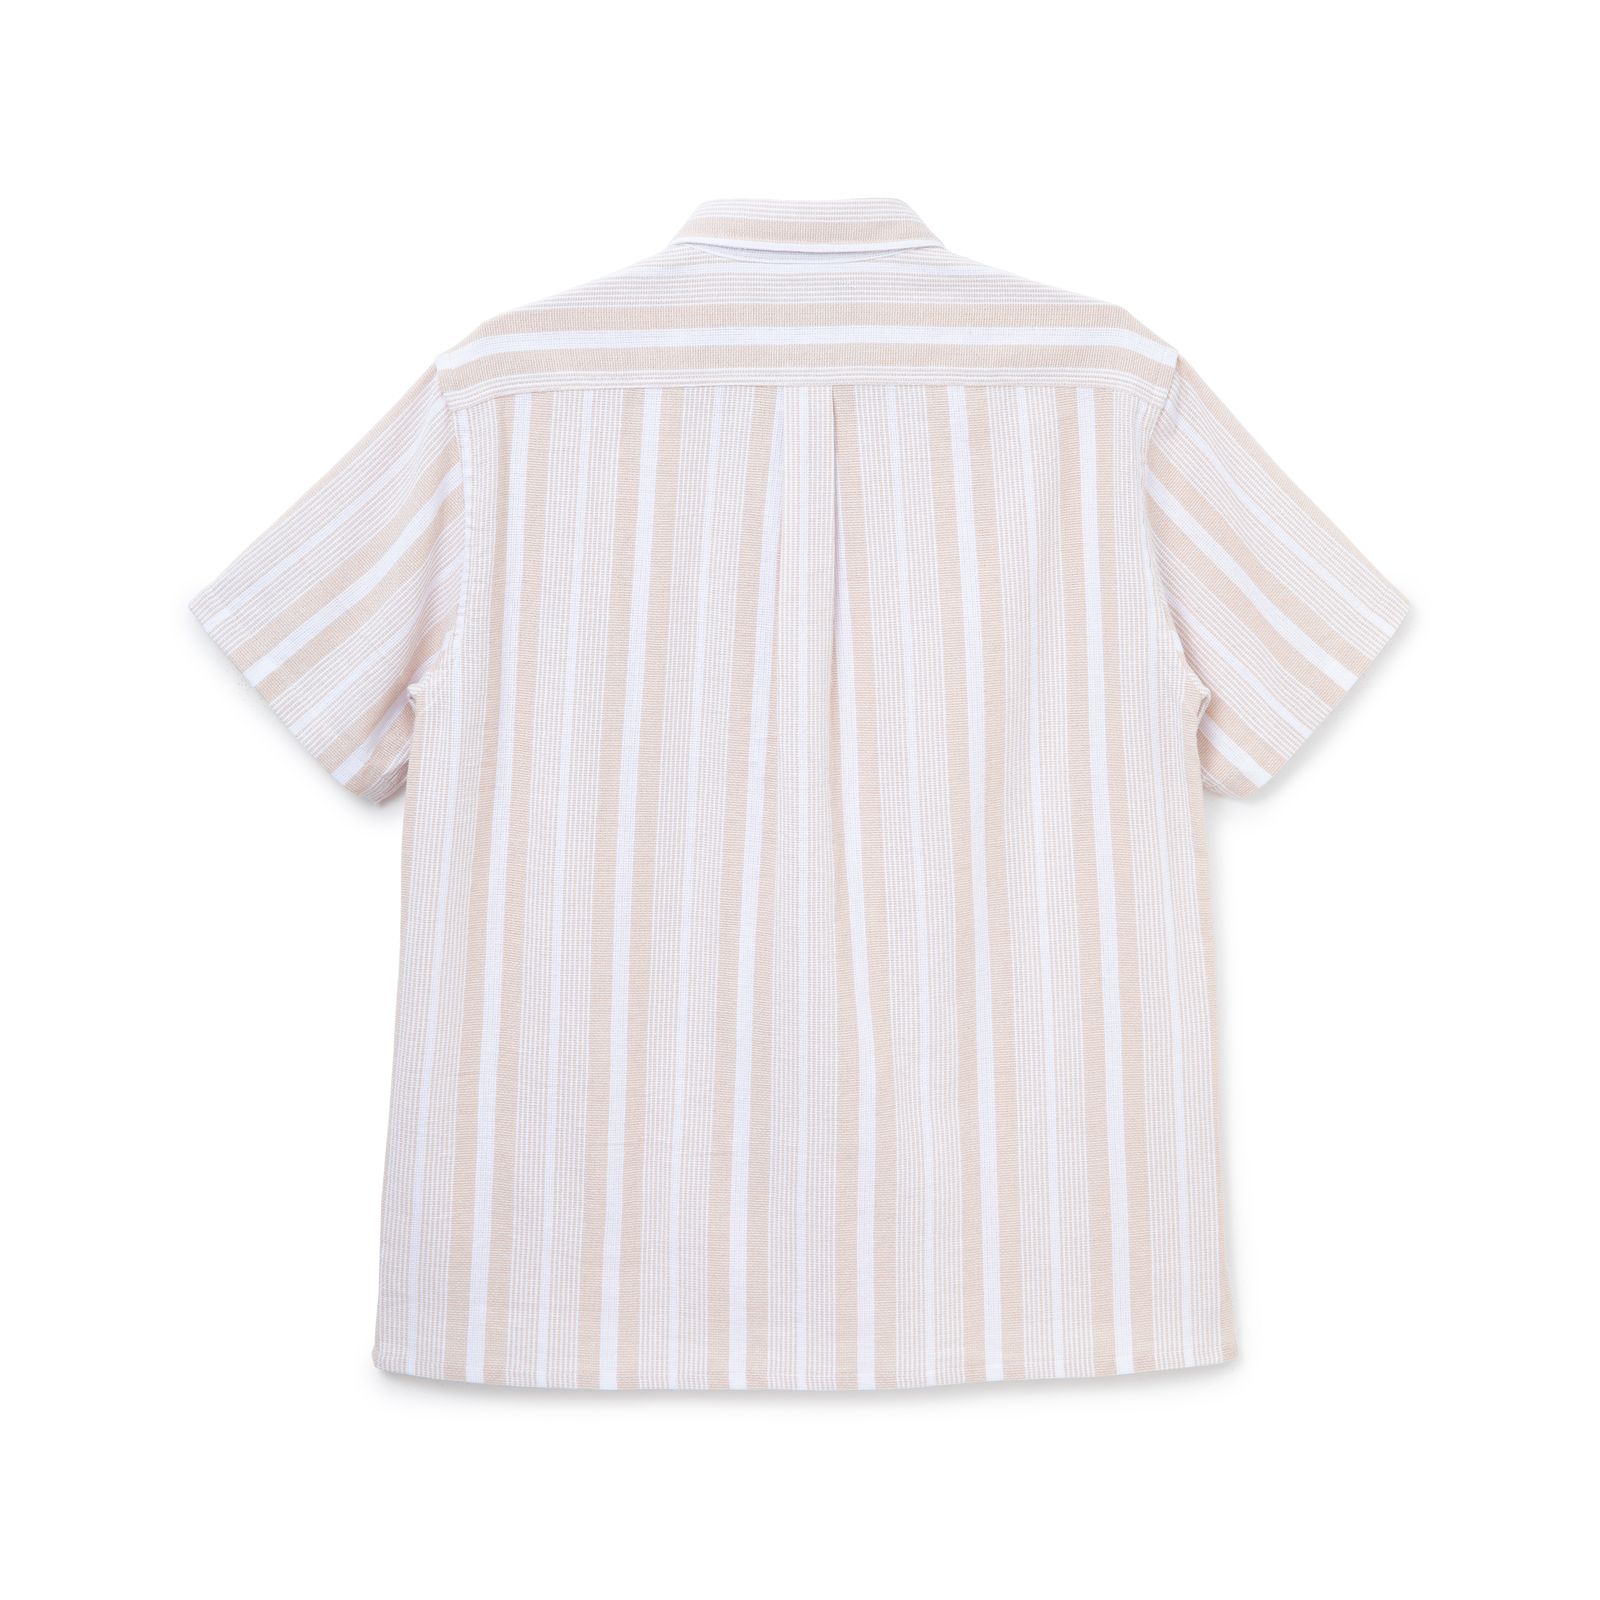 BoTT - 【残りわずか】Jacquard Stripe S/S Shirt | ACRMTSM ONLINE STORE